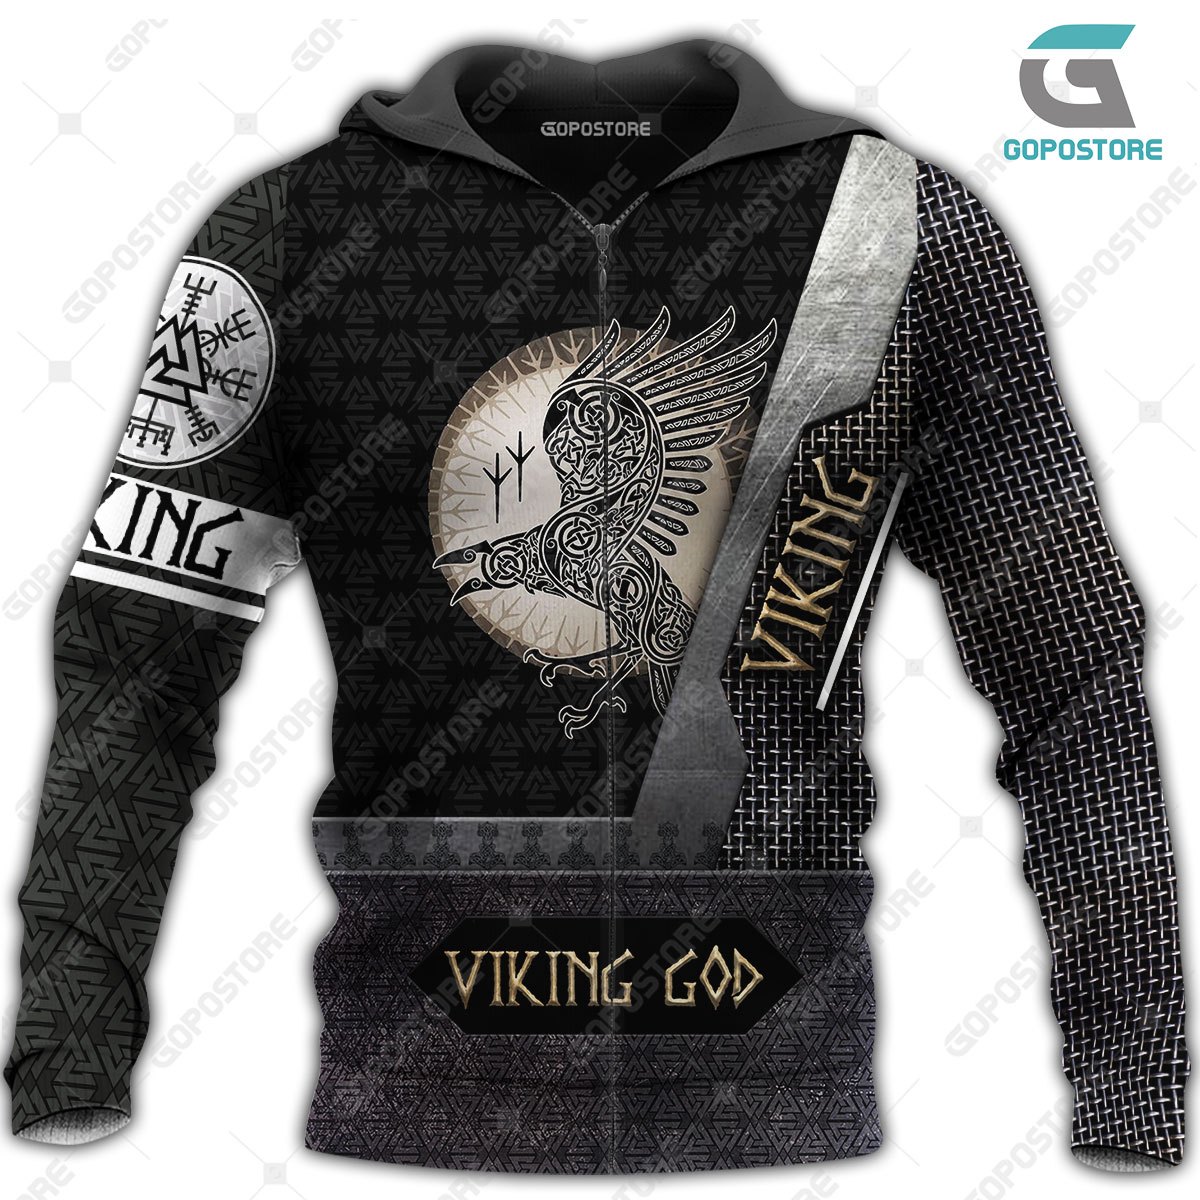 Viking god huginn and muninn full printing zip hoodie